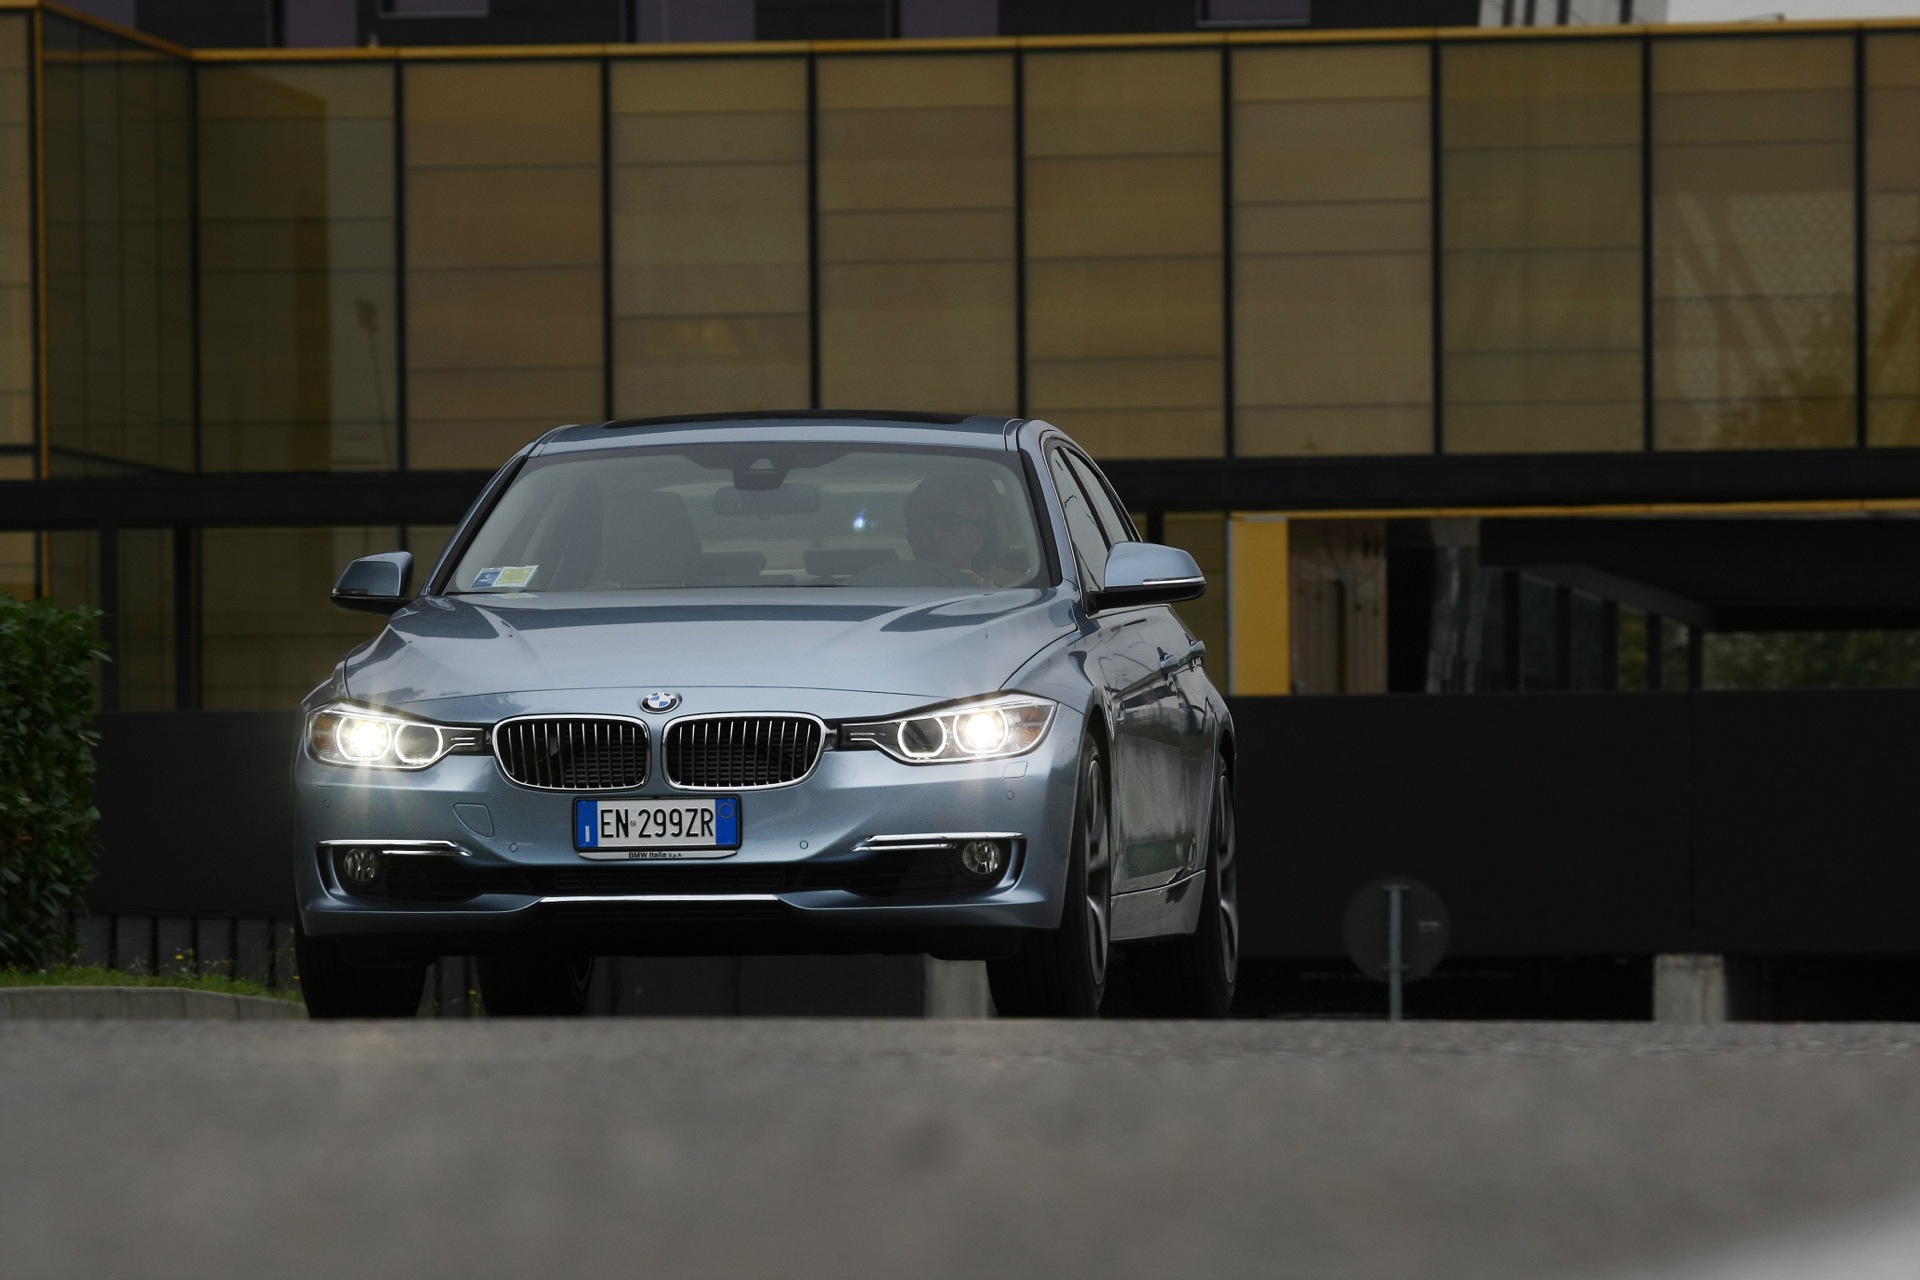 BMW SERIE 3 ACTIVE HYBRID @ drivelife.it magazine on line